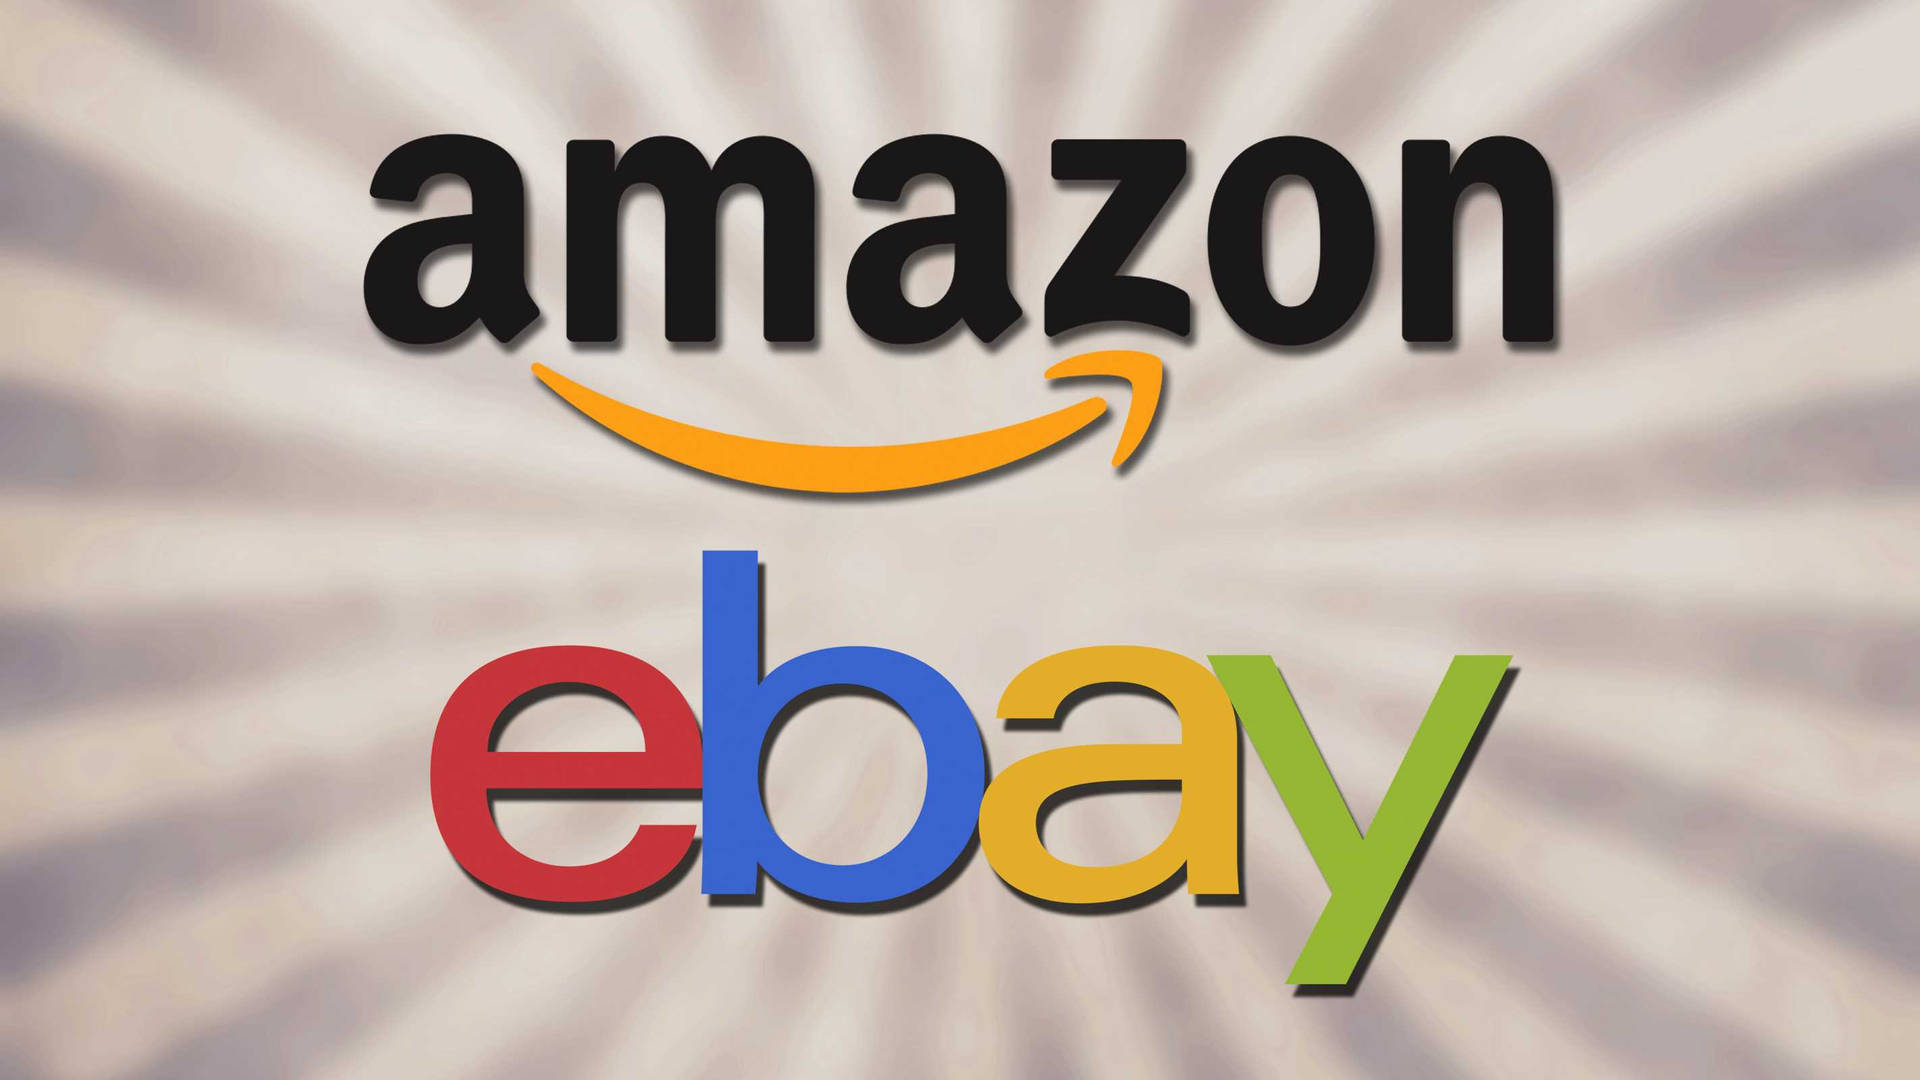 Amazon And Ebay Logos